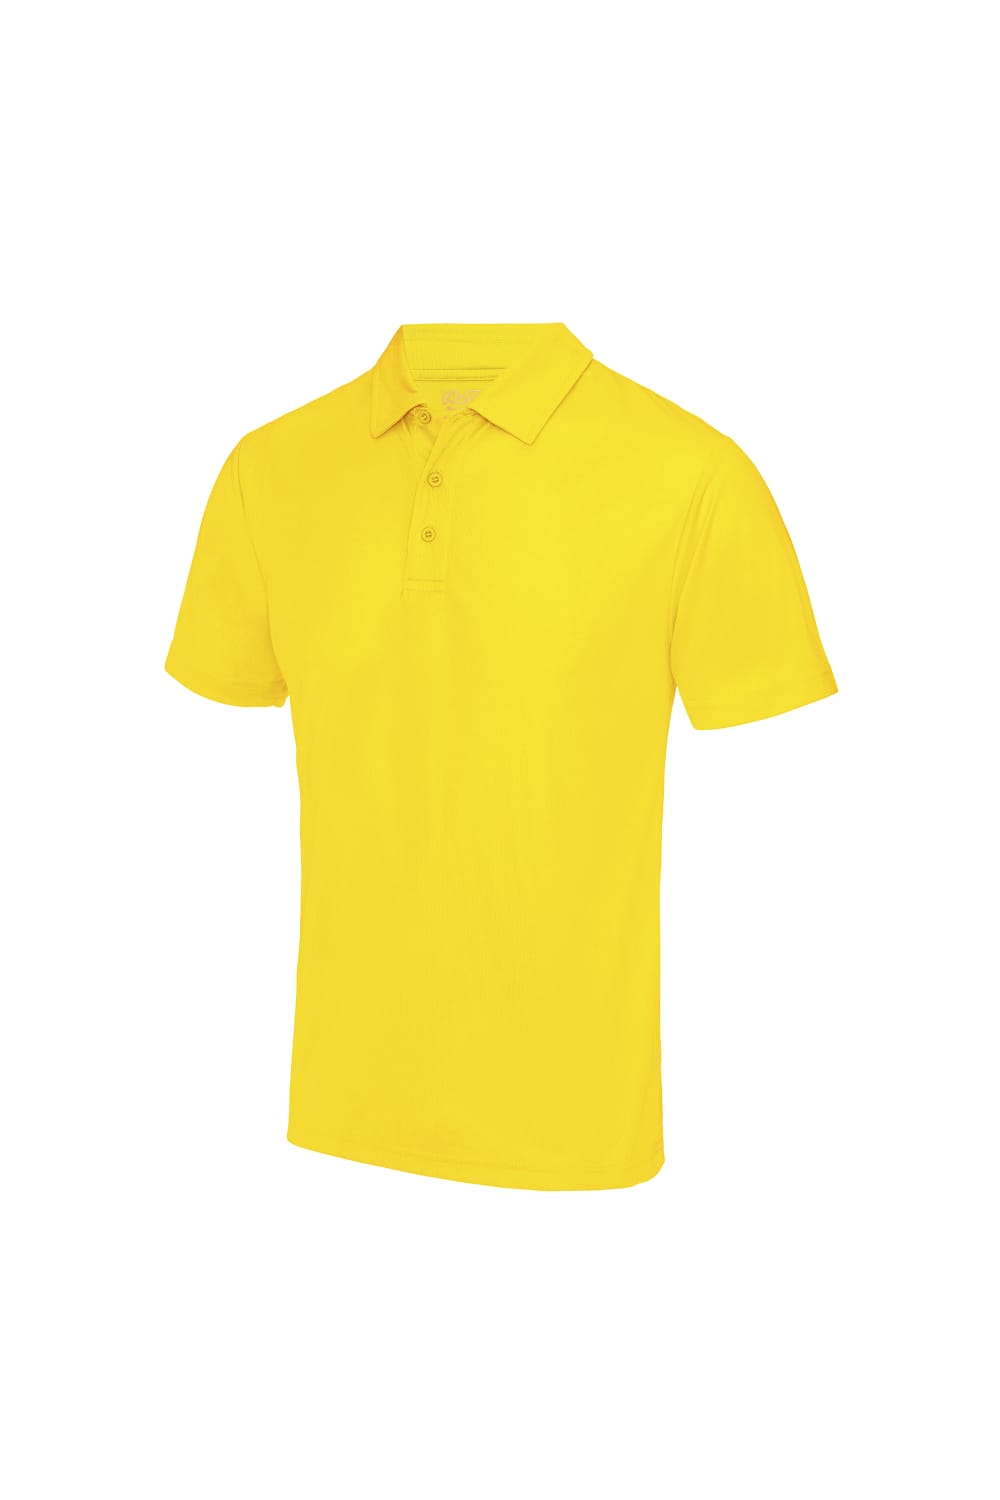 Mens Plain Sports Polo Shirt - Sun Yellow